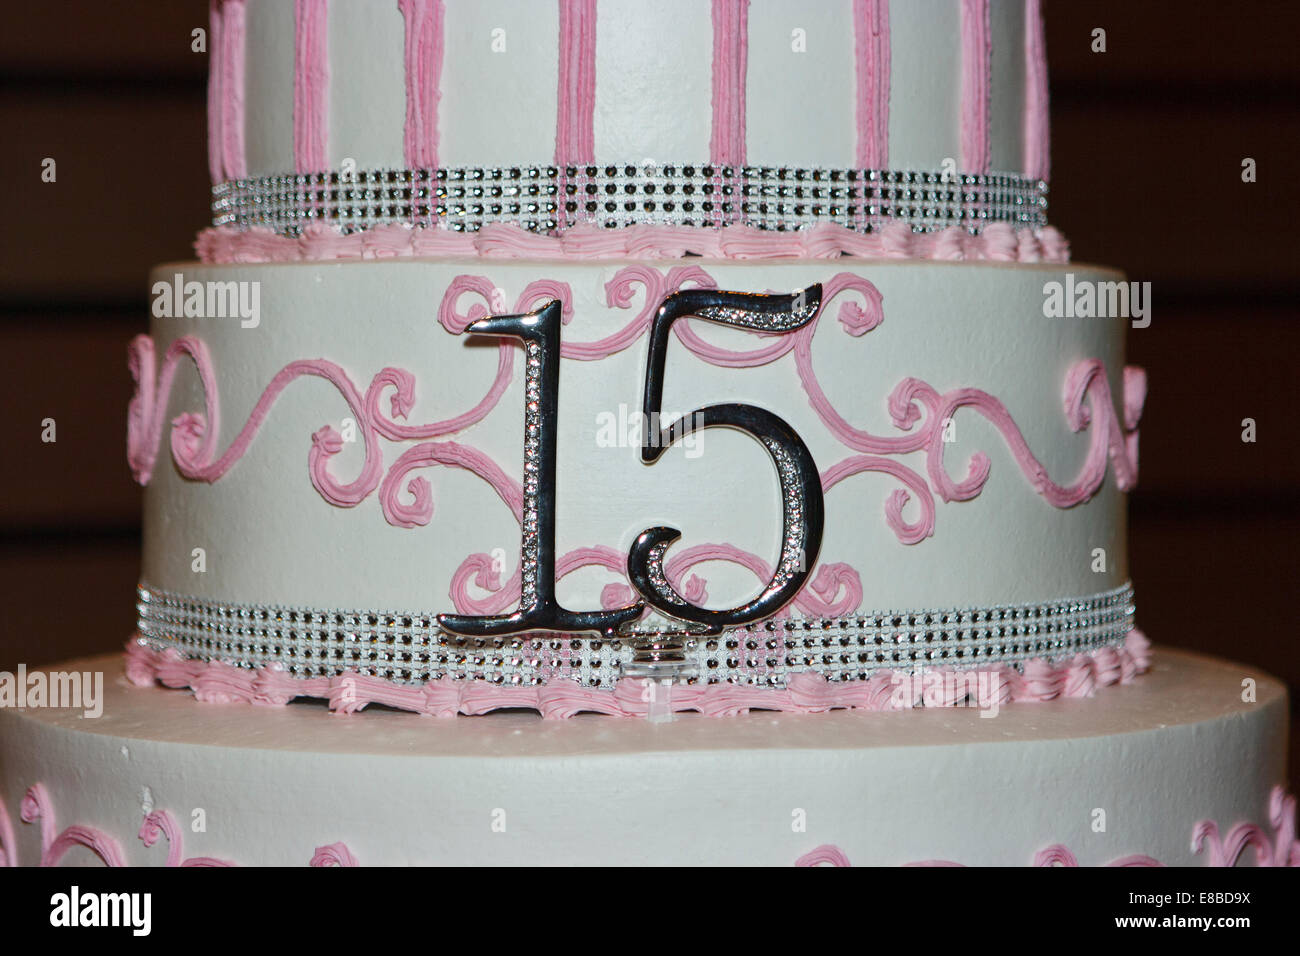 Pin on Diy Birthday Cake